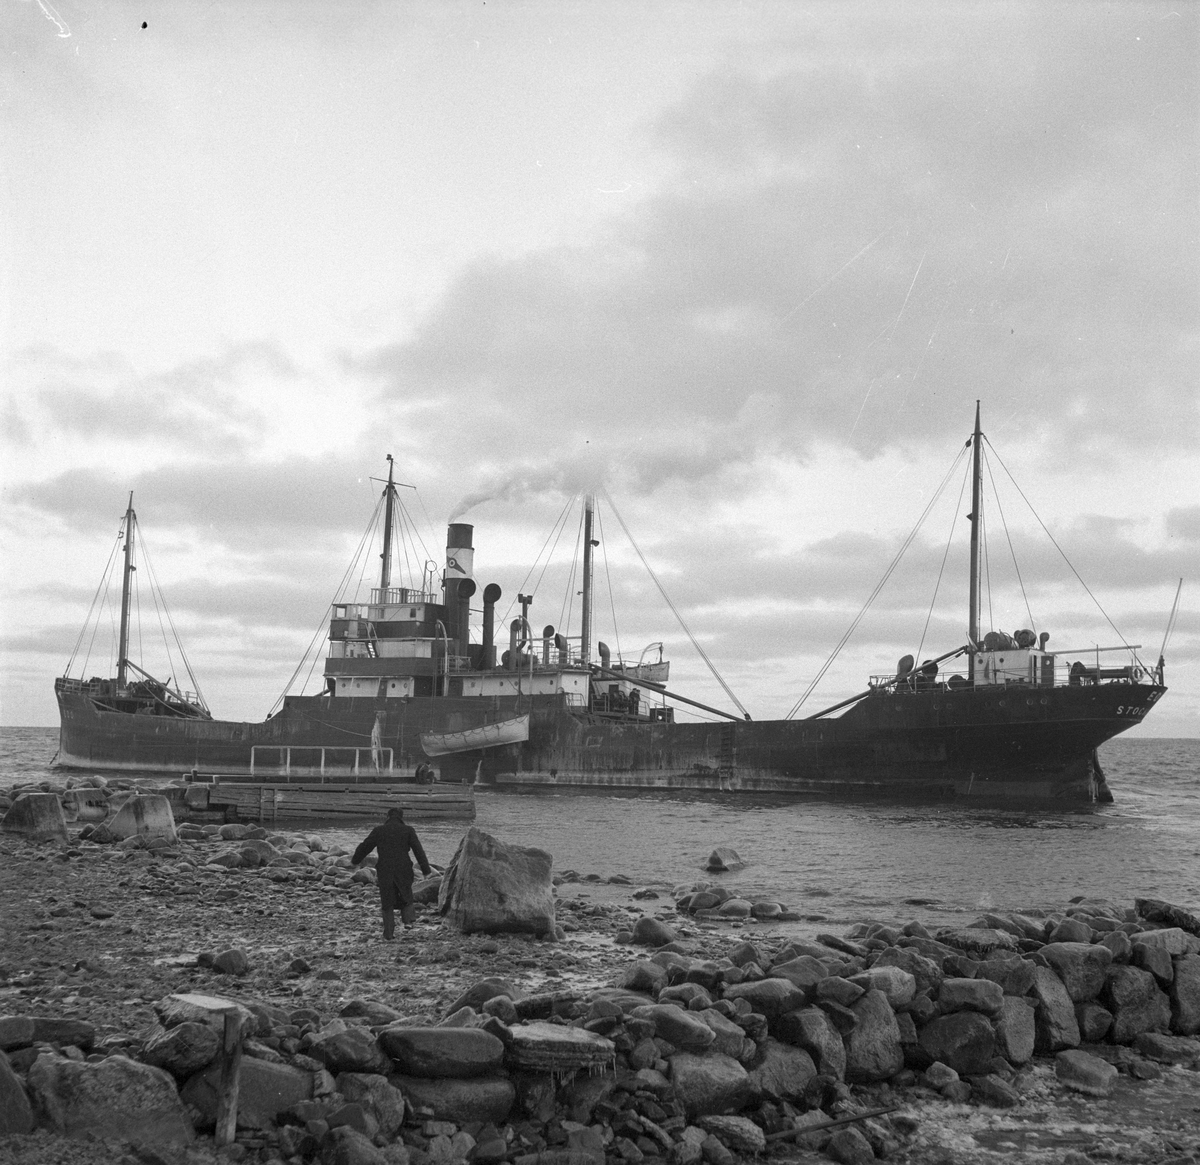 Bildreportage, nödställd båt "Edö". 8 januari 1954.
Storm över Gävle.